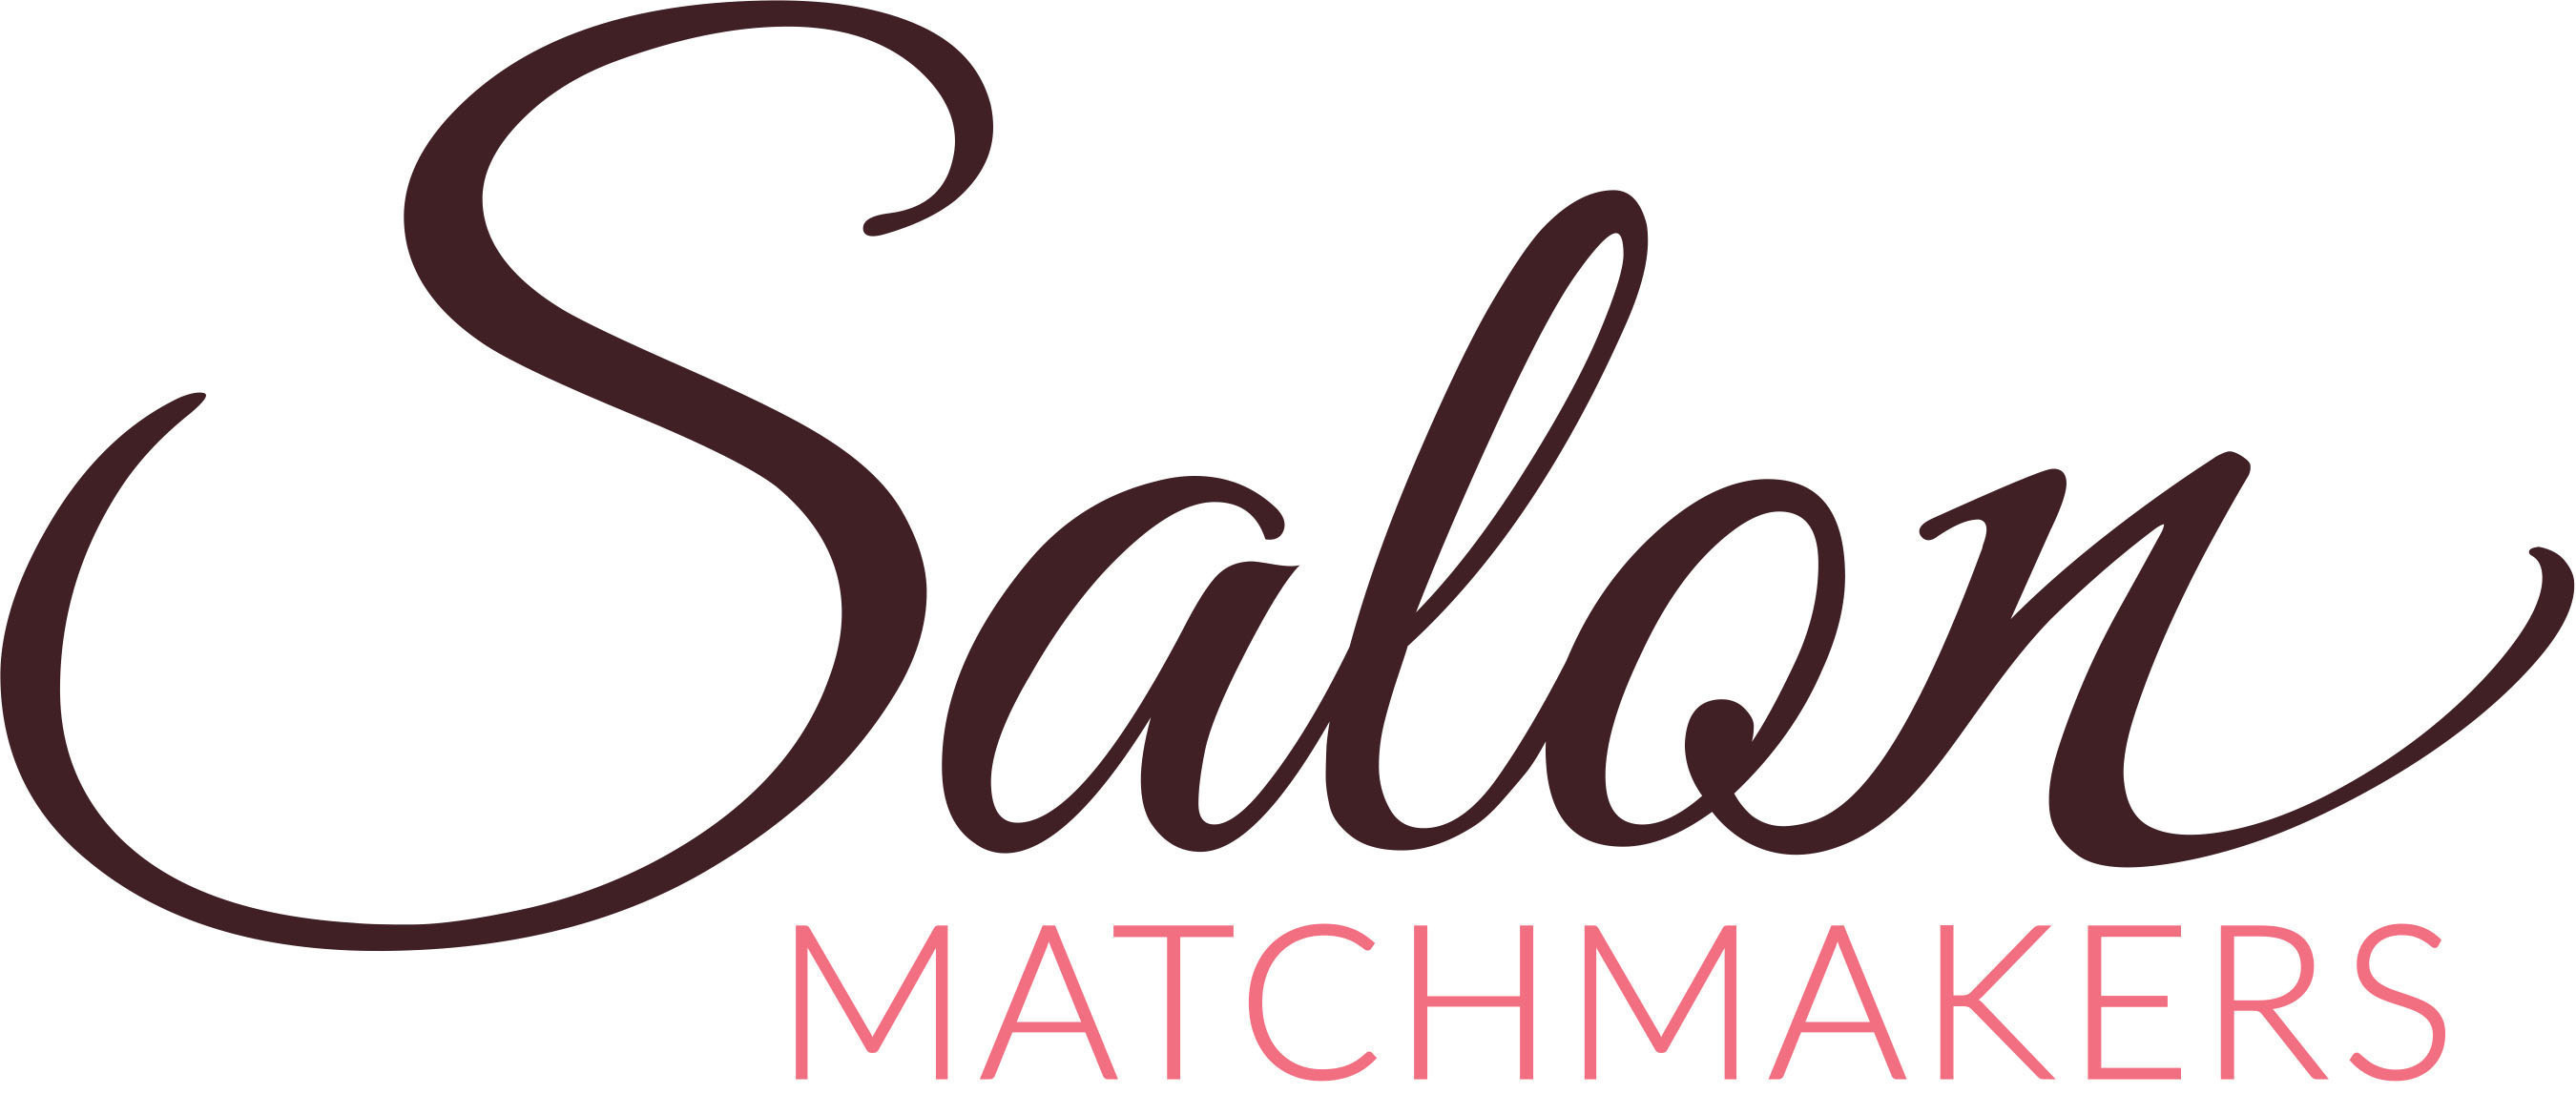 Salon Matchmakers logo